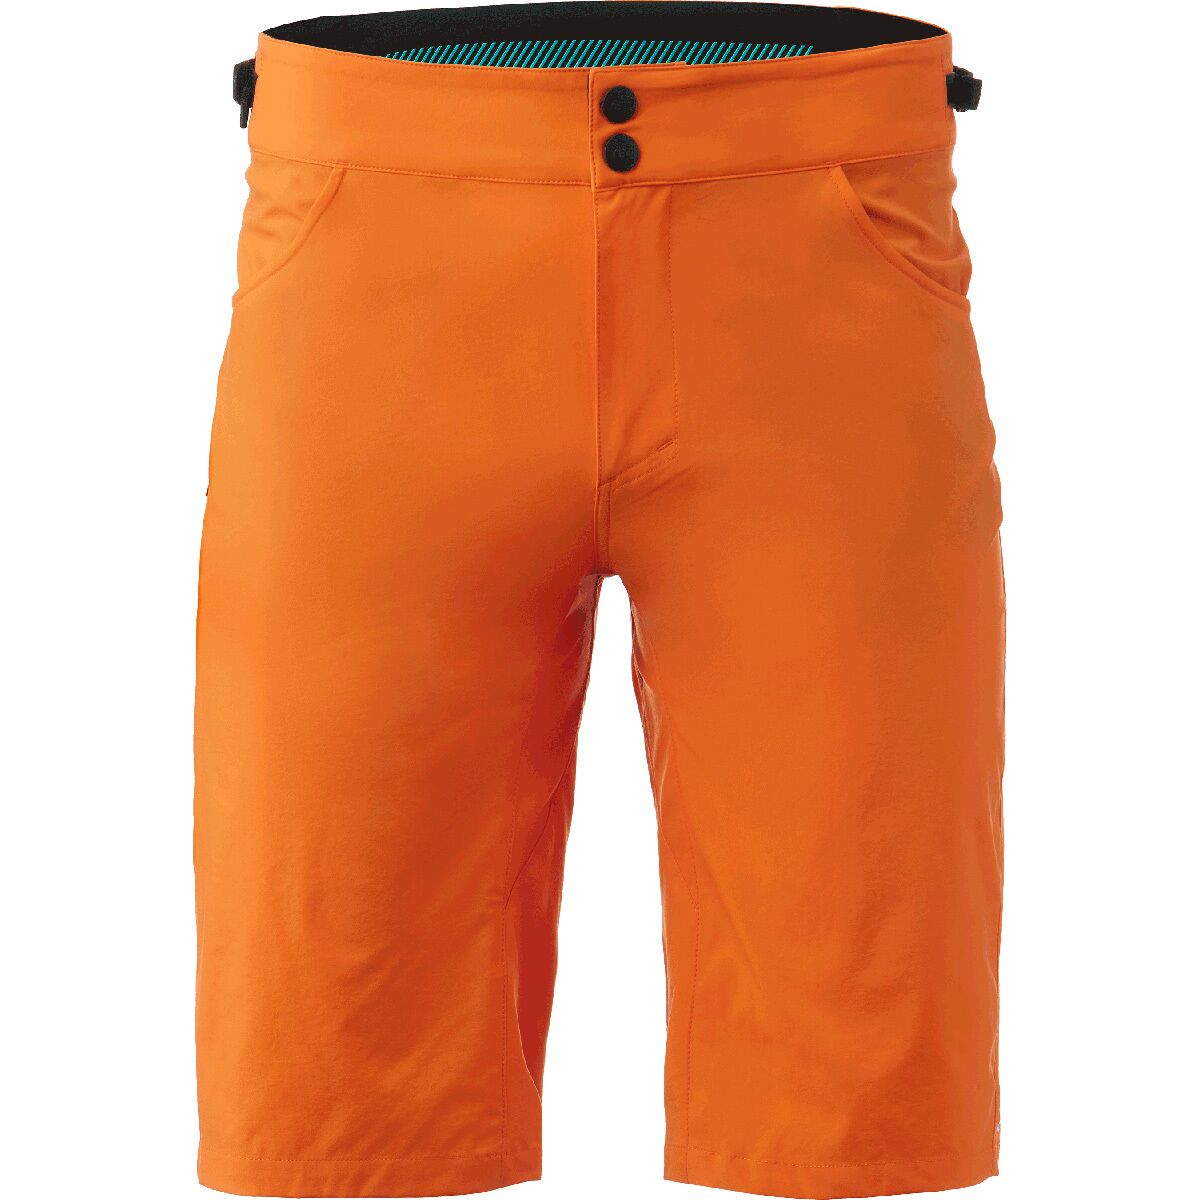 Yeti Cycles Antero Short - Men's Orange, L